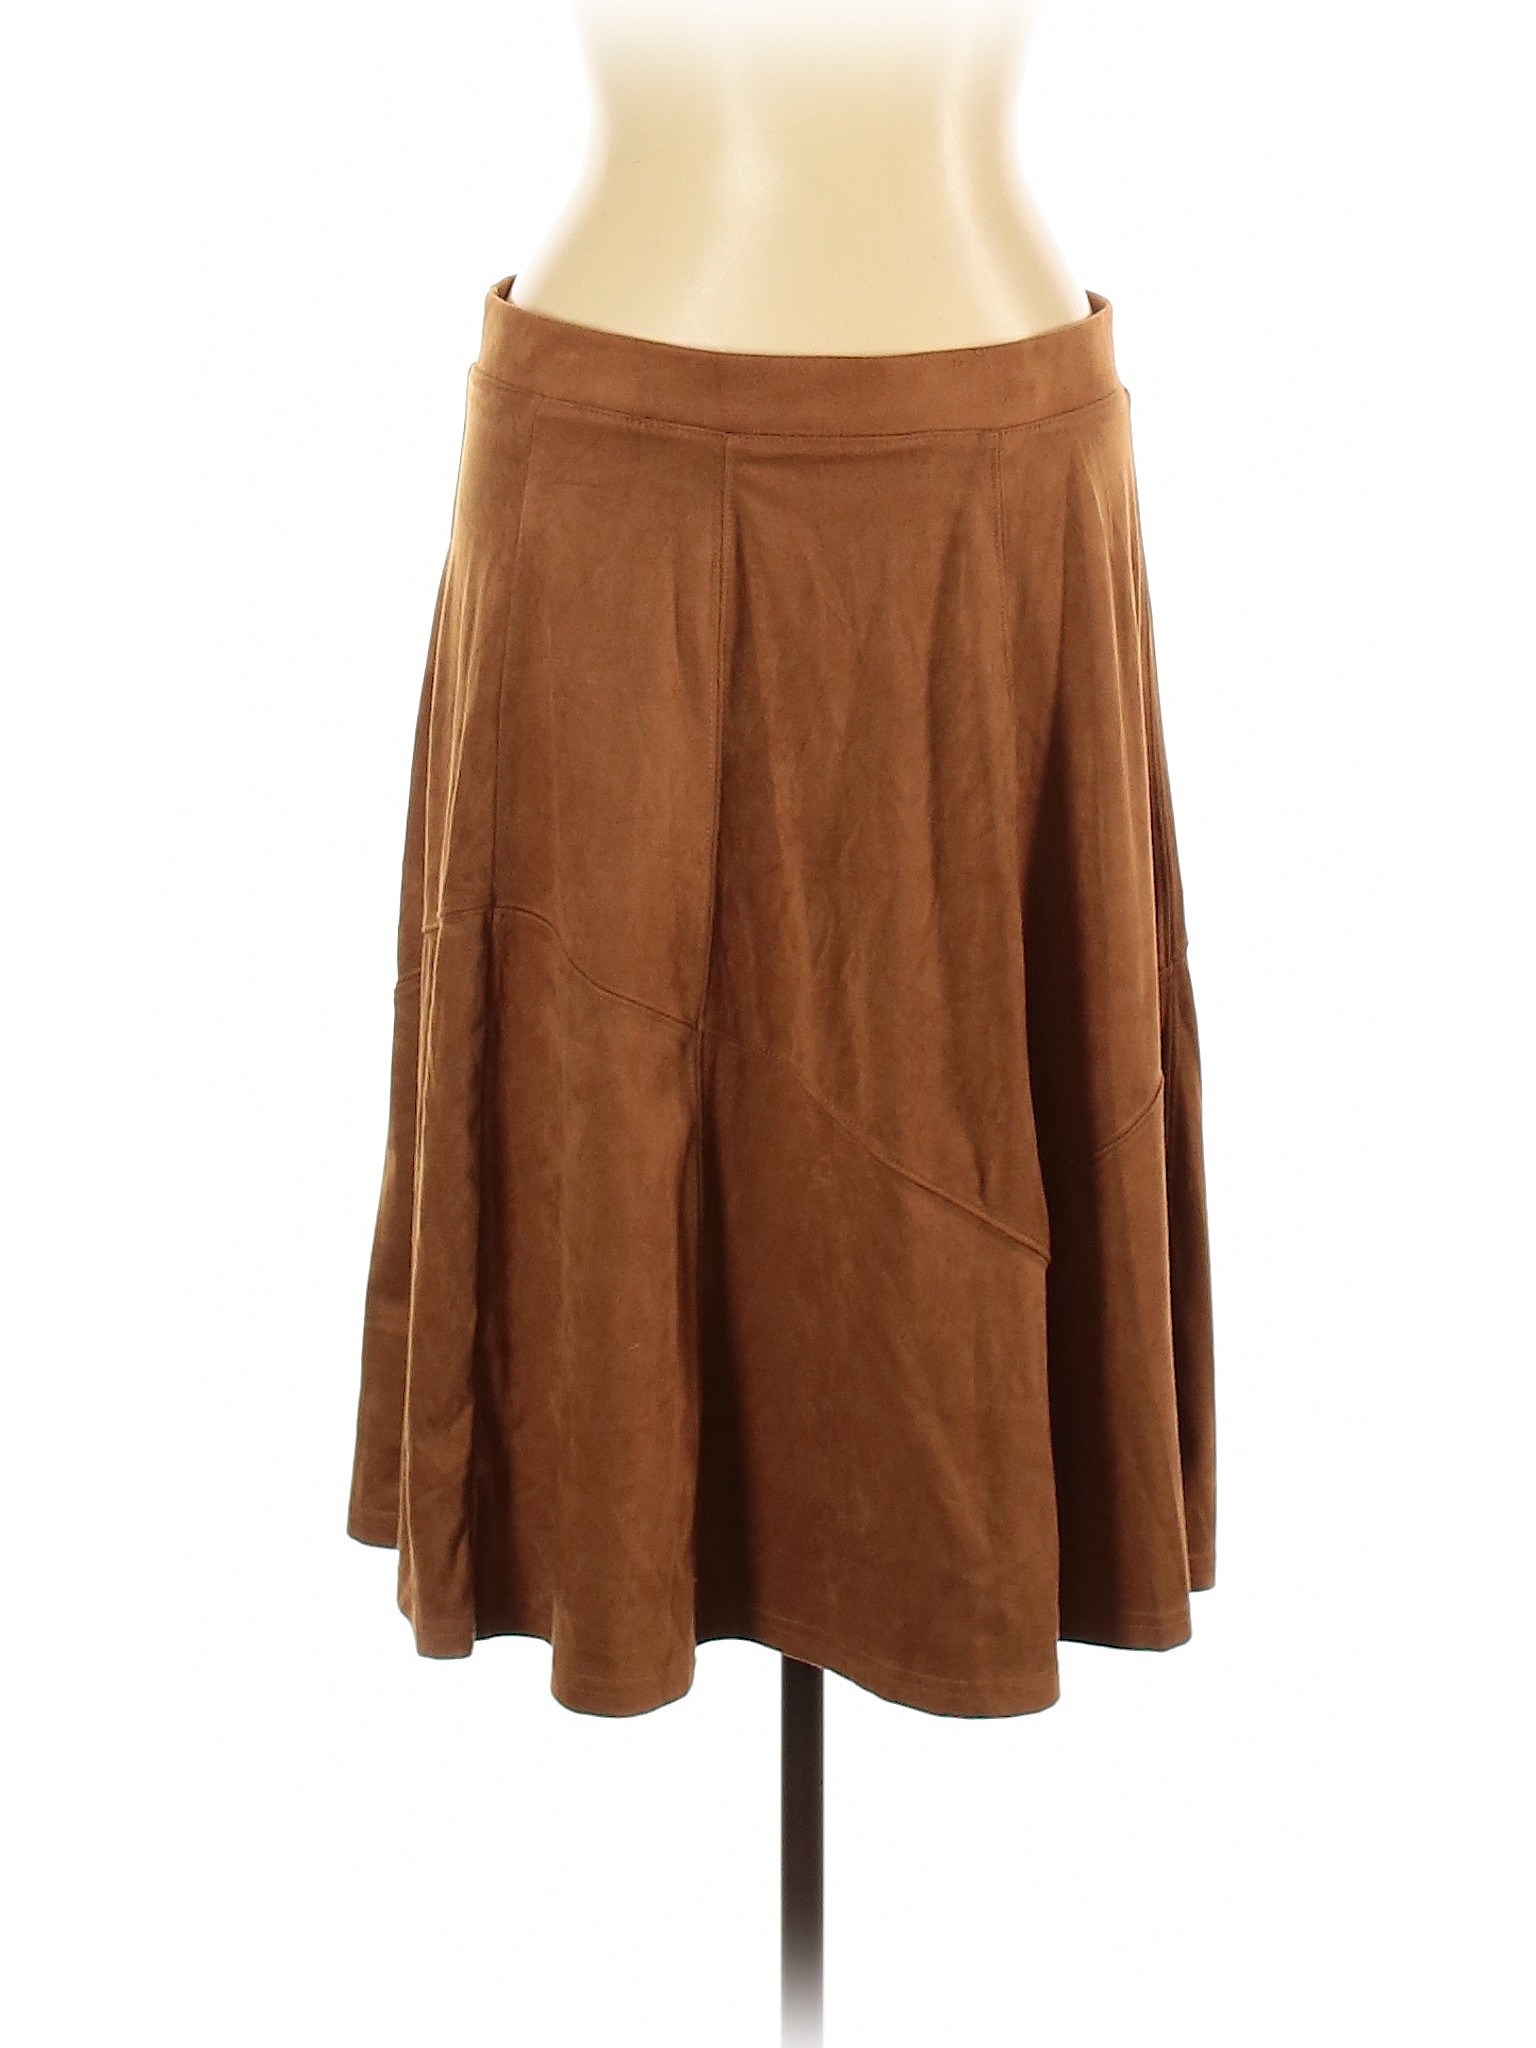 Westport 1962 Women Brown Casual Skirt L | eBay